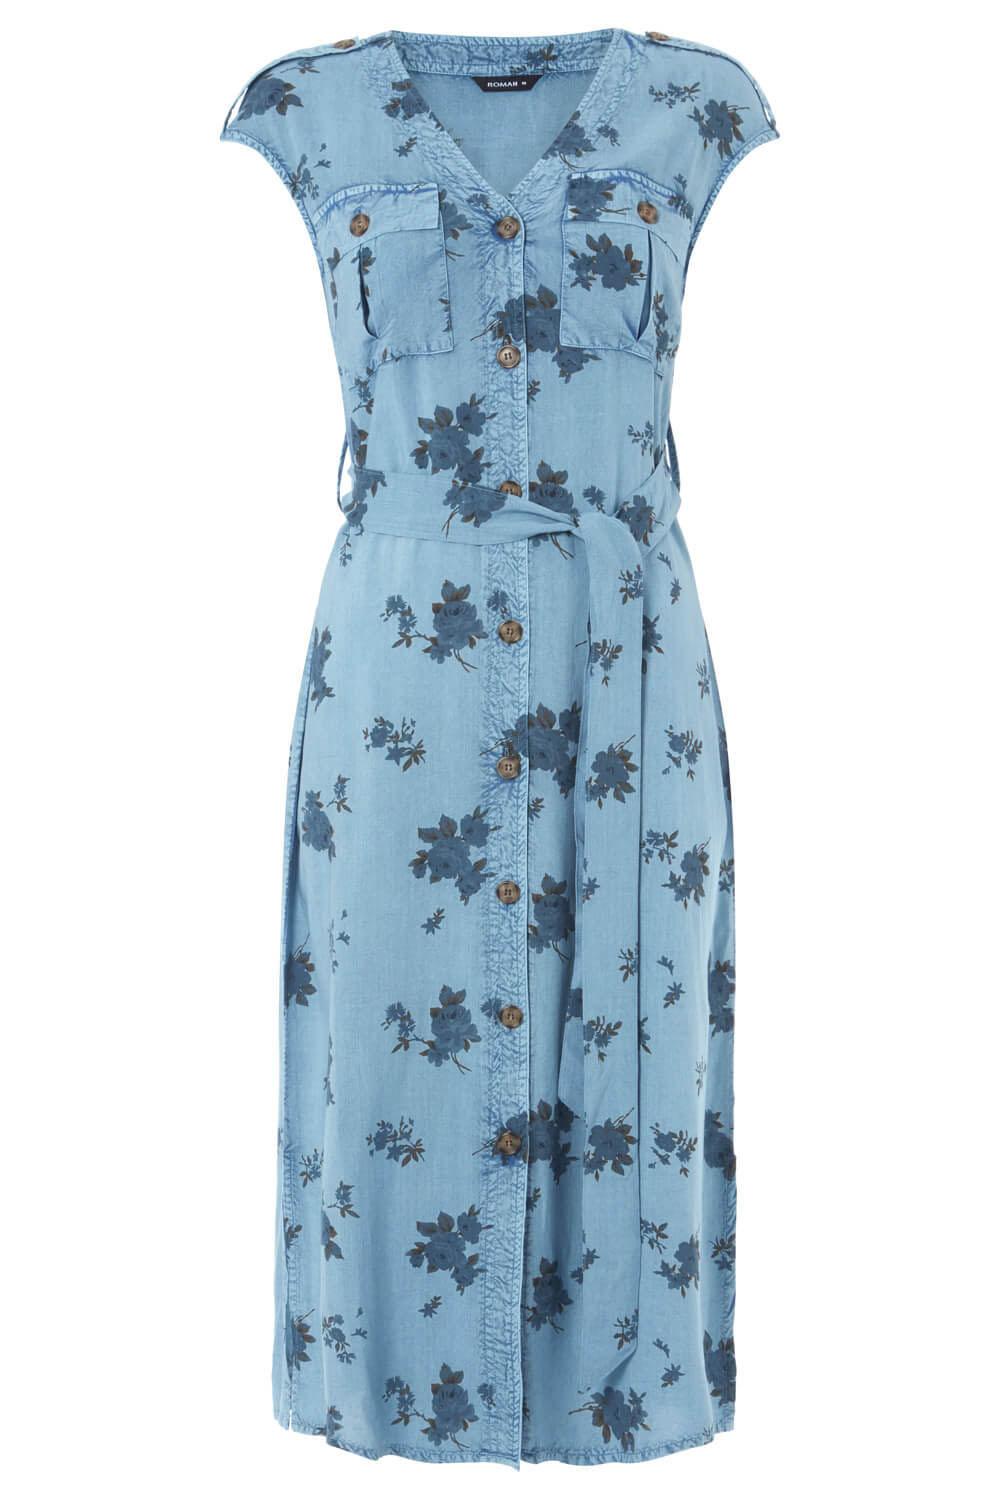 Floral Print Utility Midi Dress in BLUE - Roman Originals UK